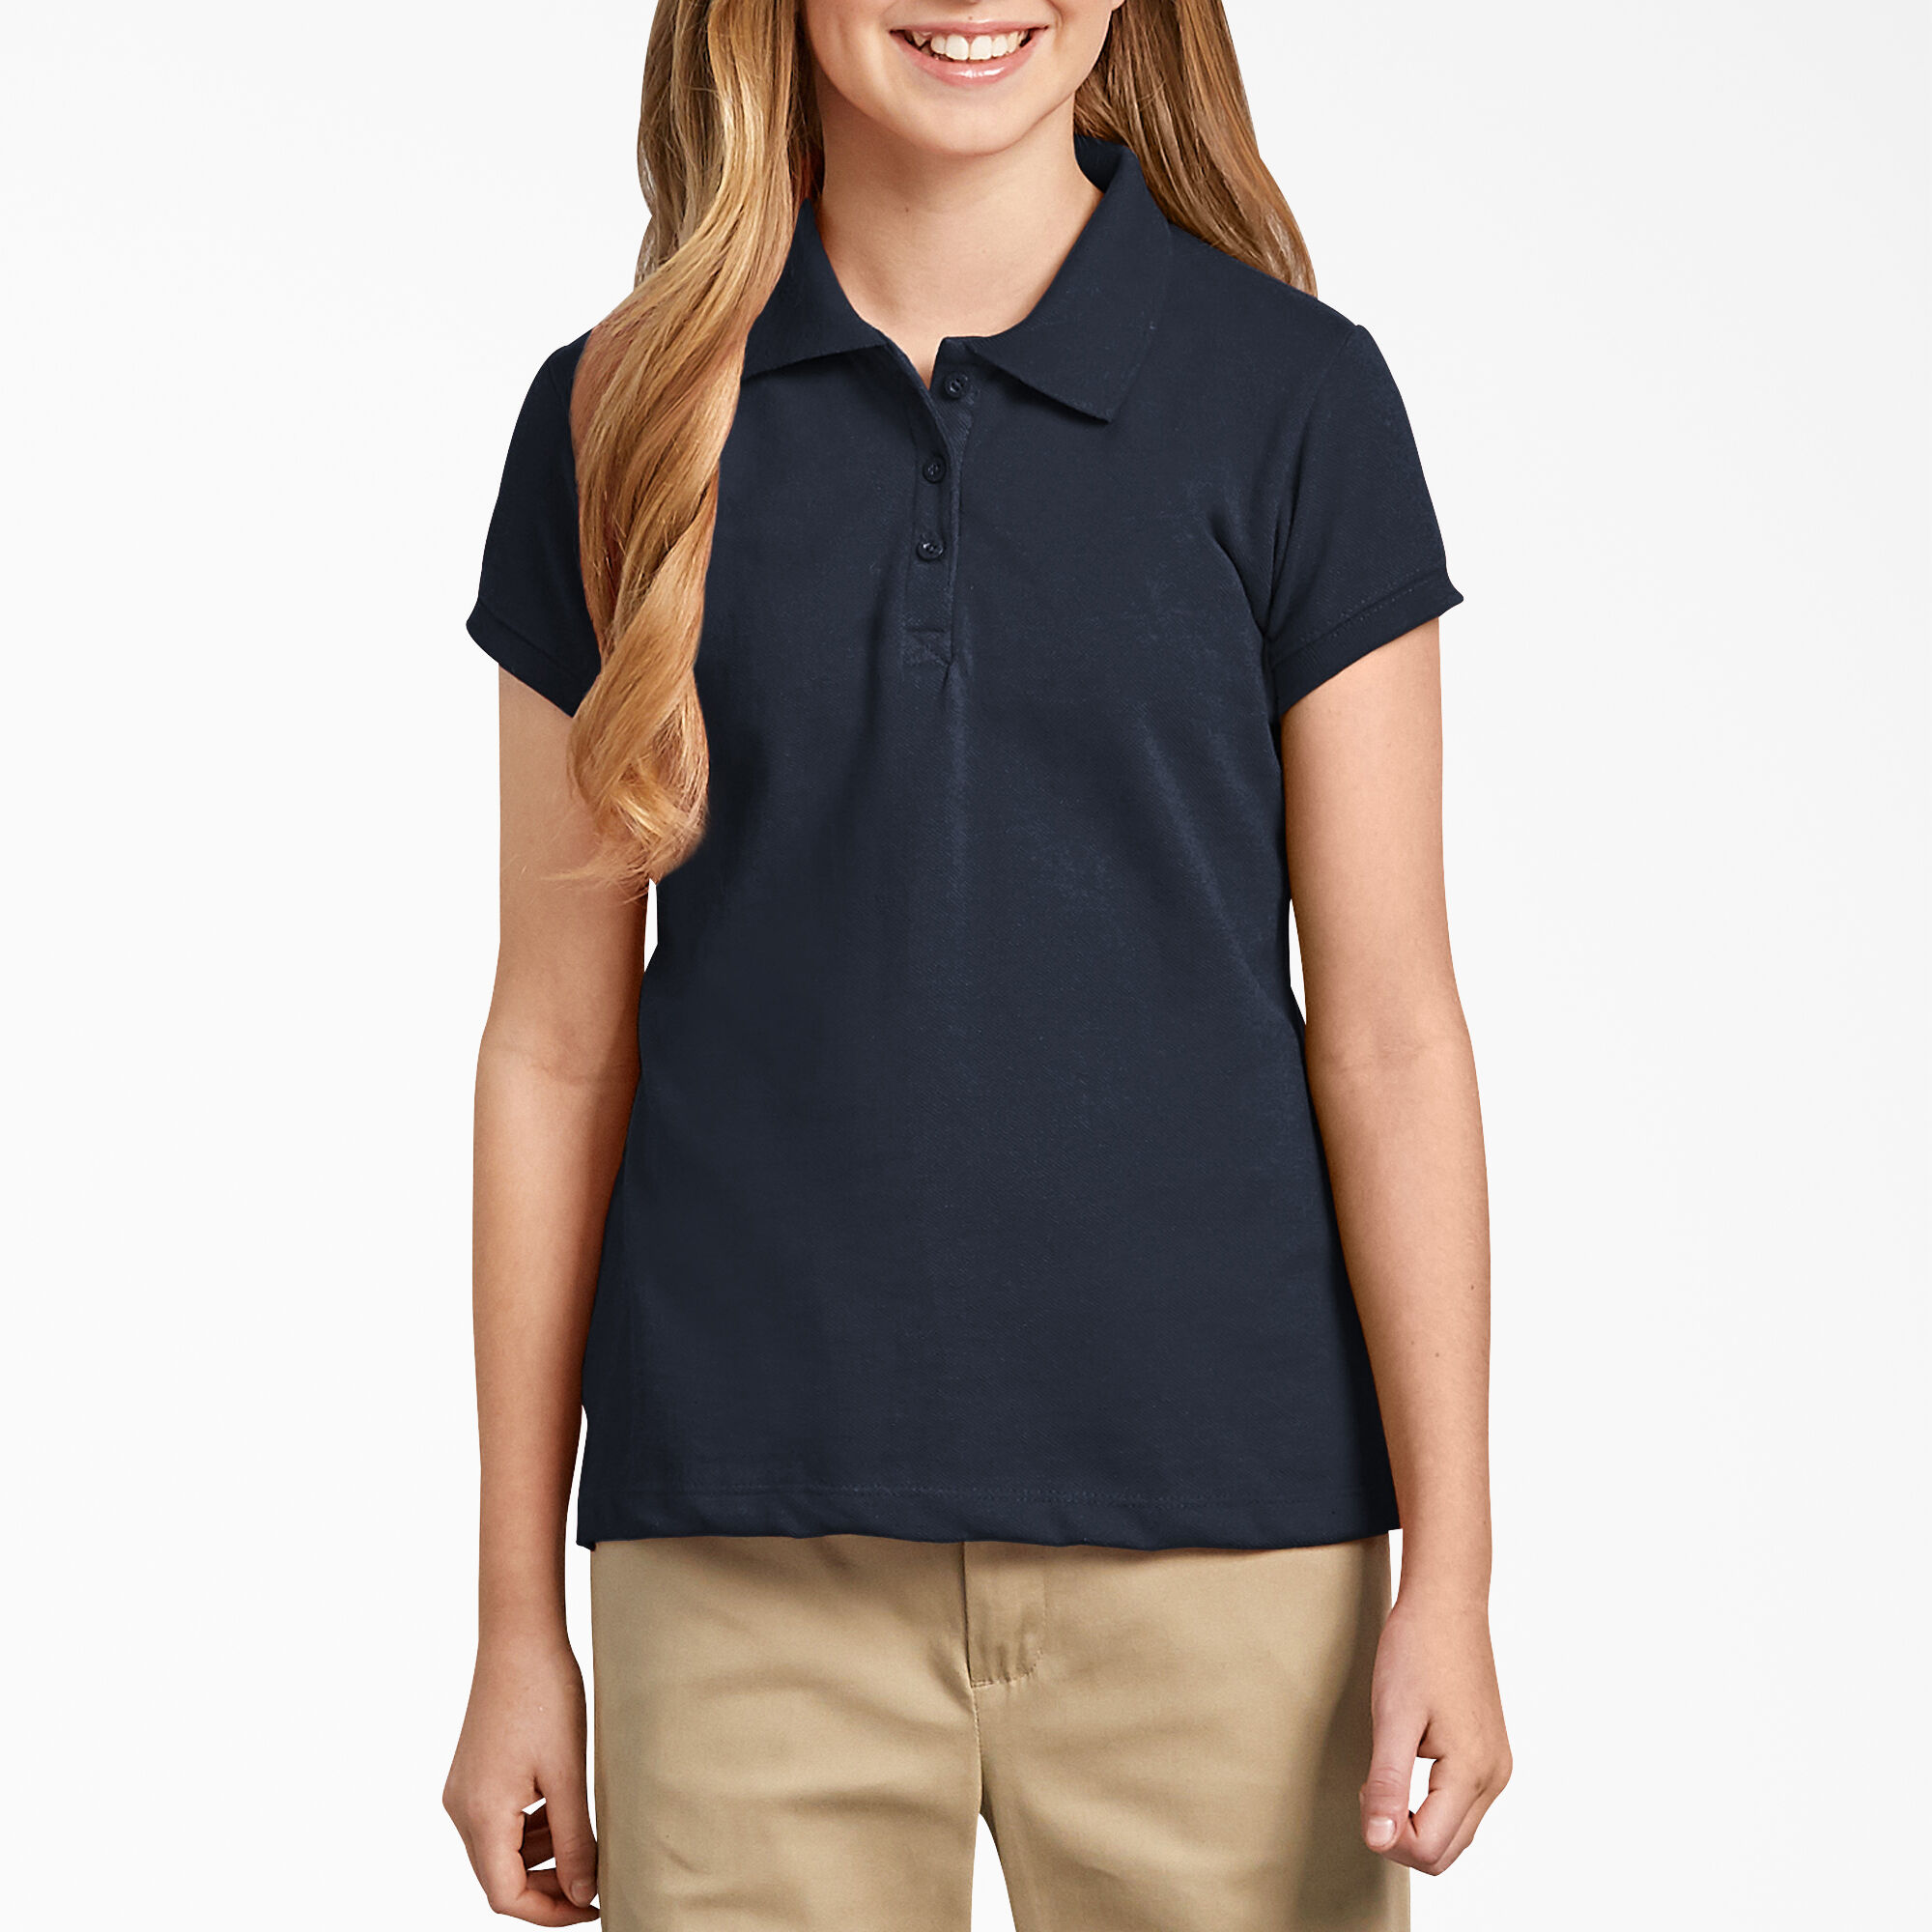 Polo Shirts For Girls Hotsell, 56% OFF | espirituviajero.com